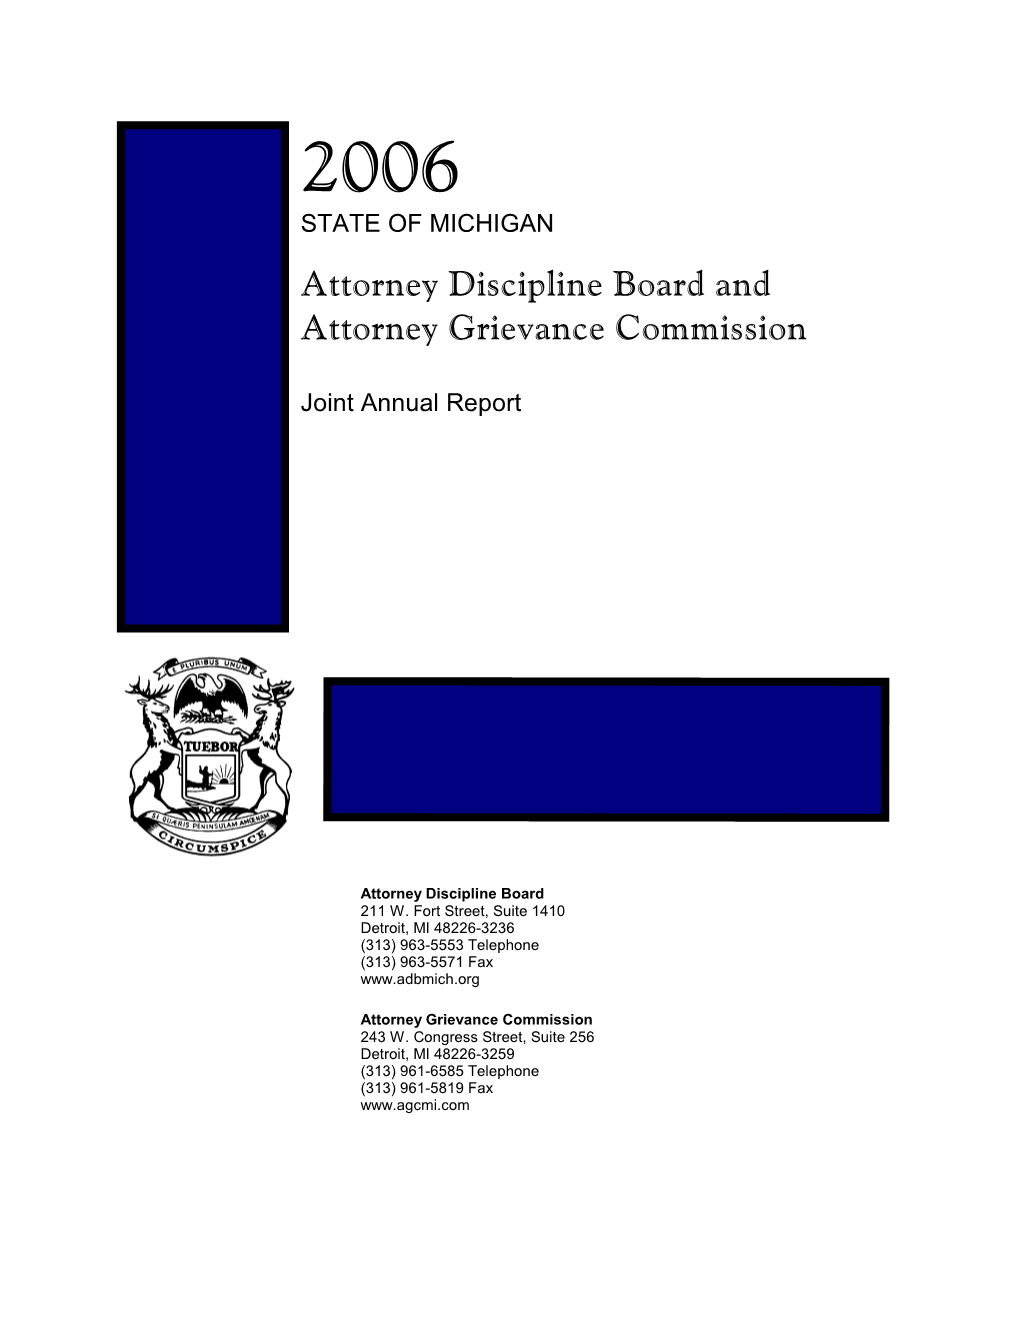 2006 AGC & ADB Joint Annual Report